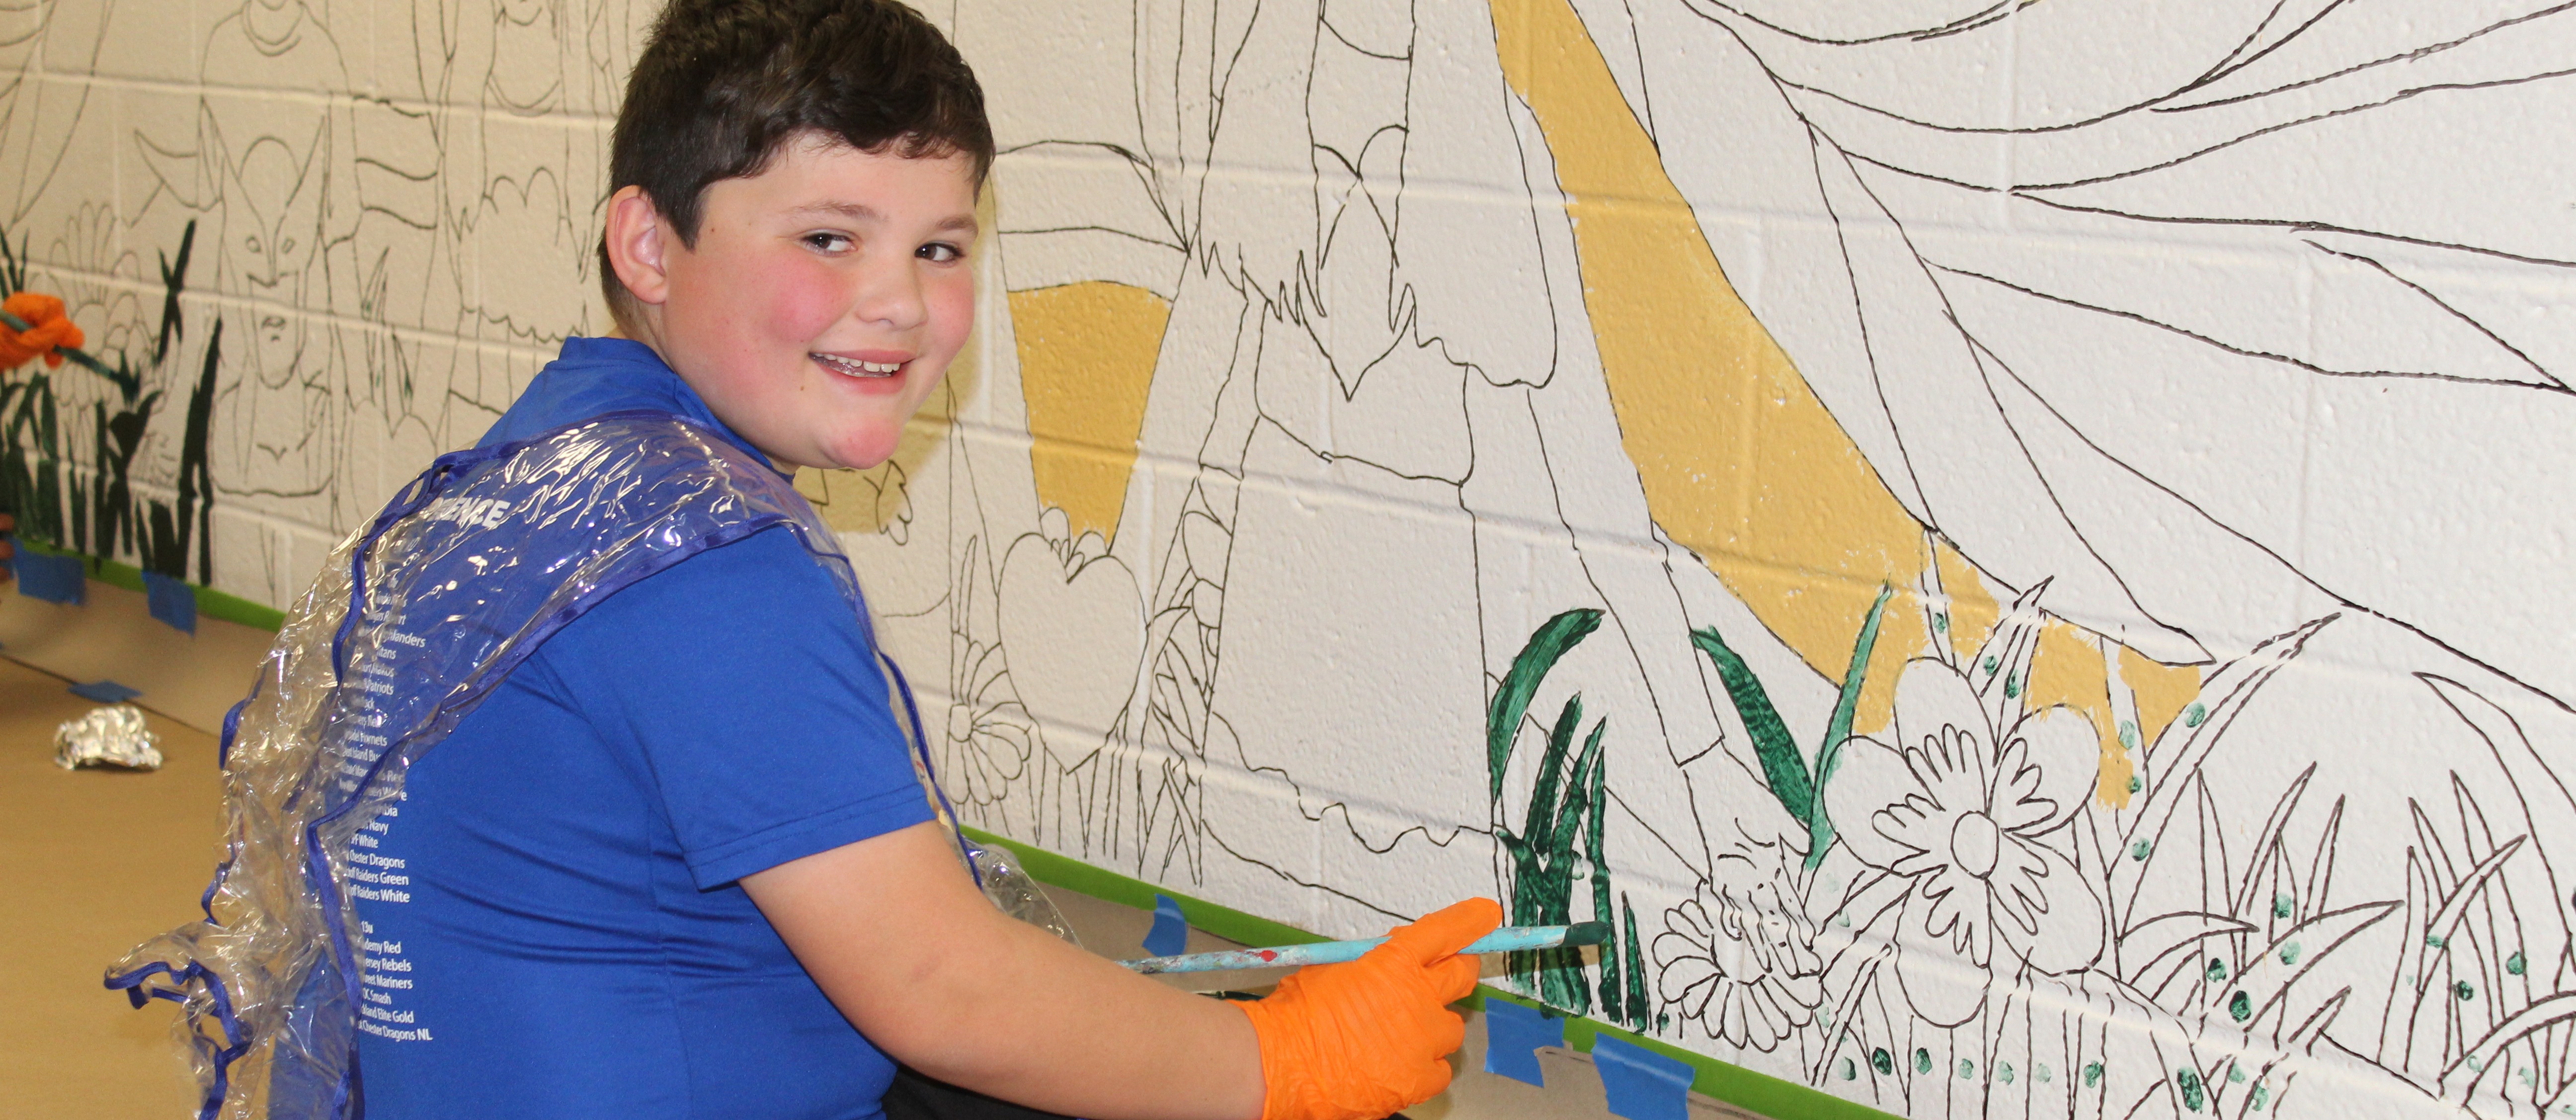 Grade 5 student paints a mural